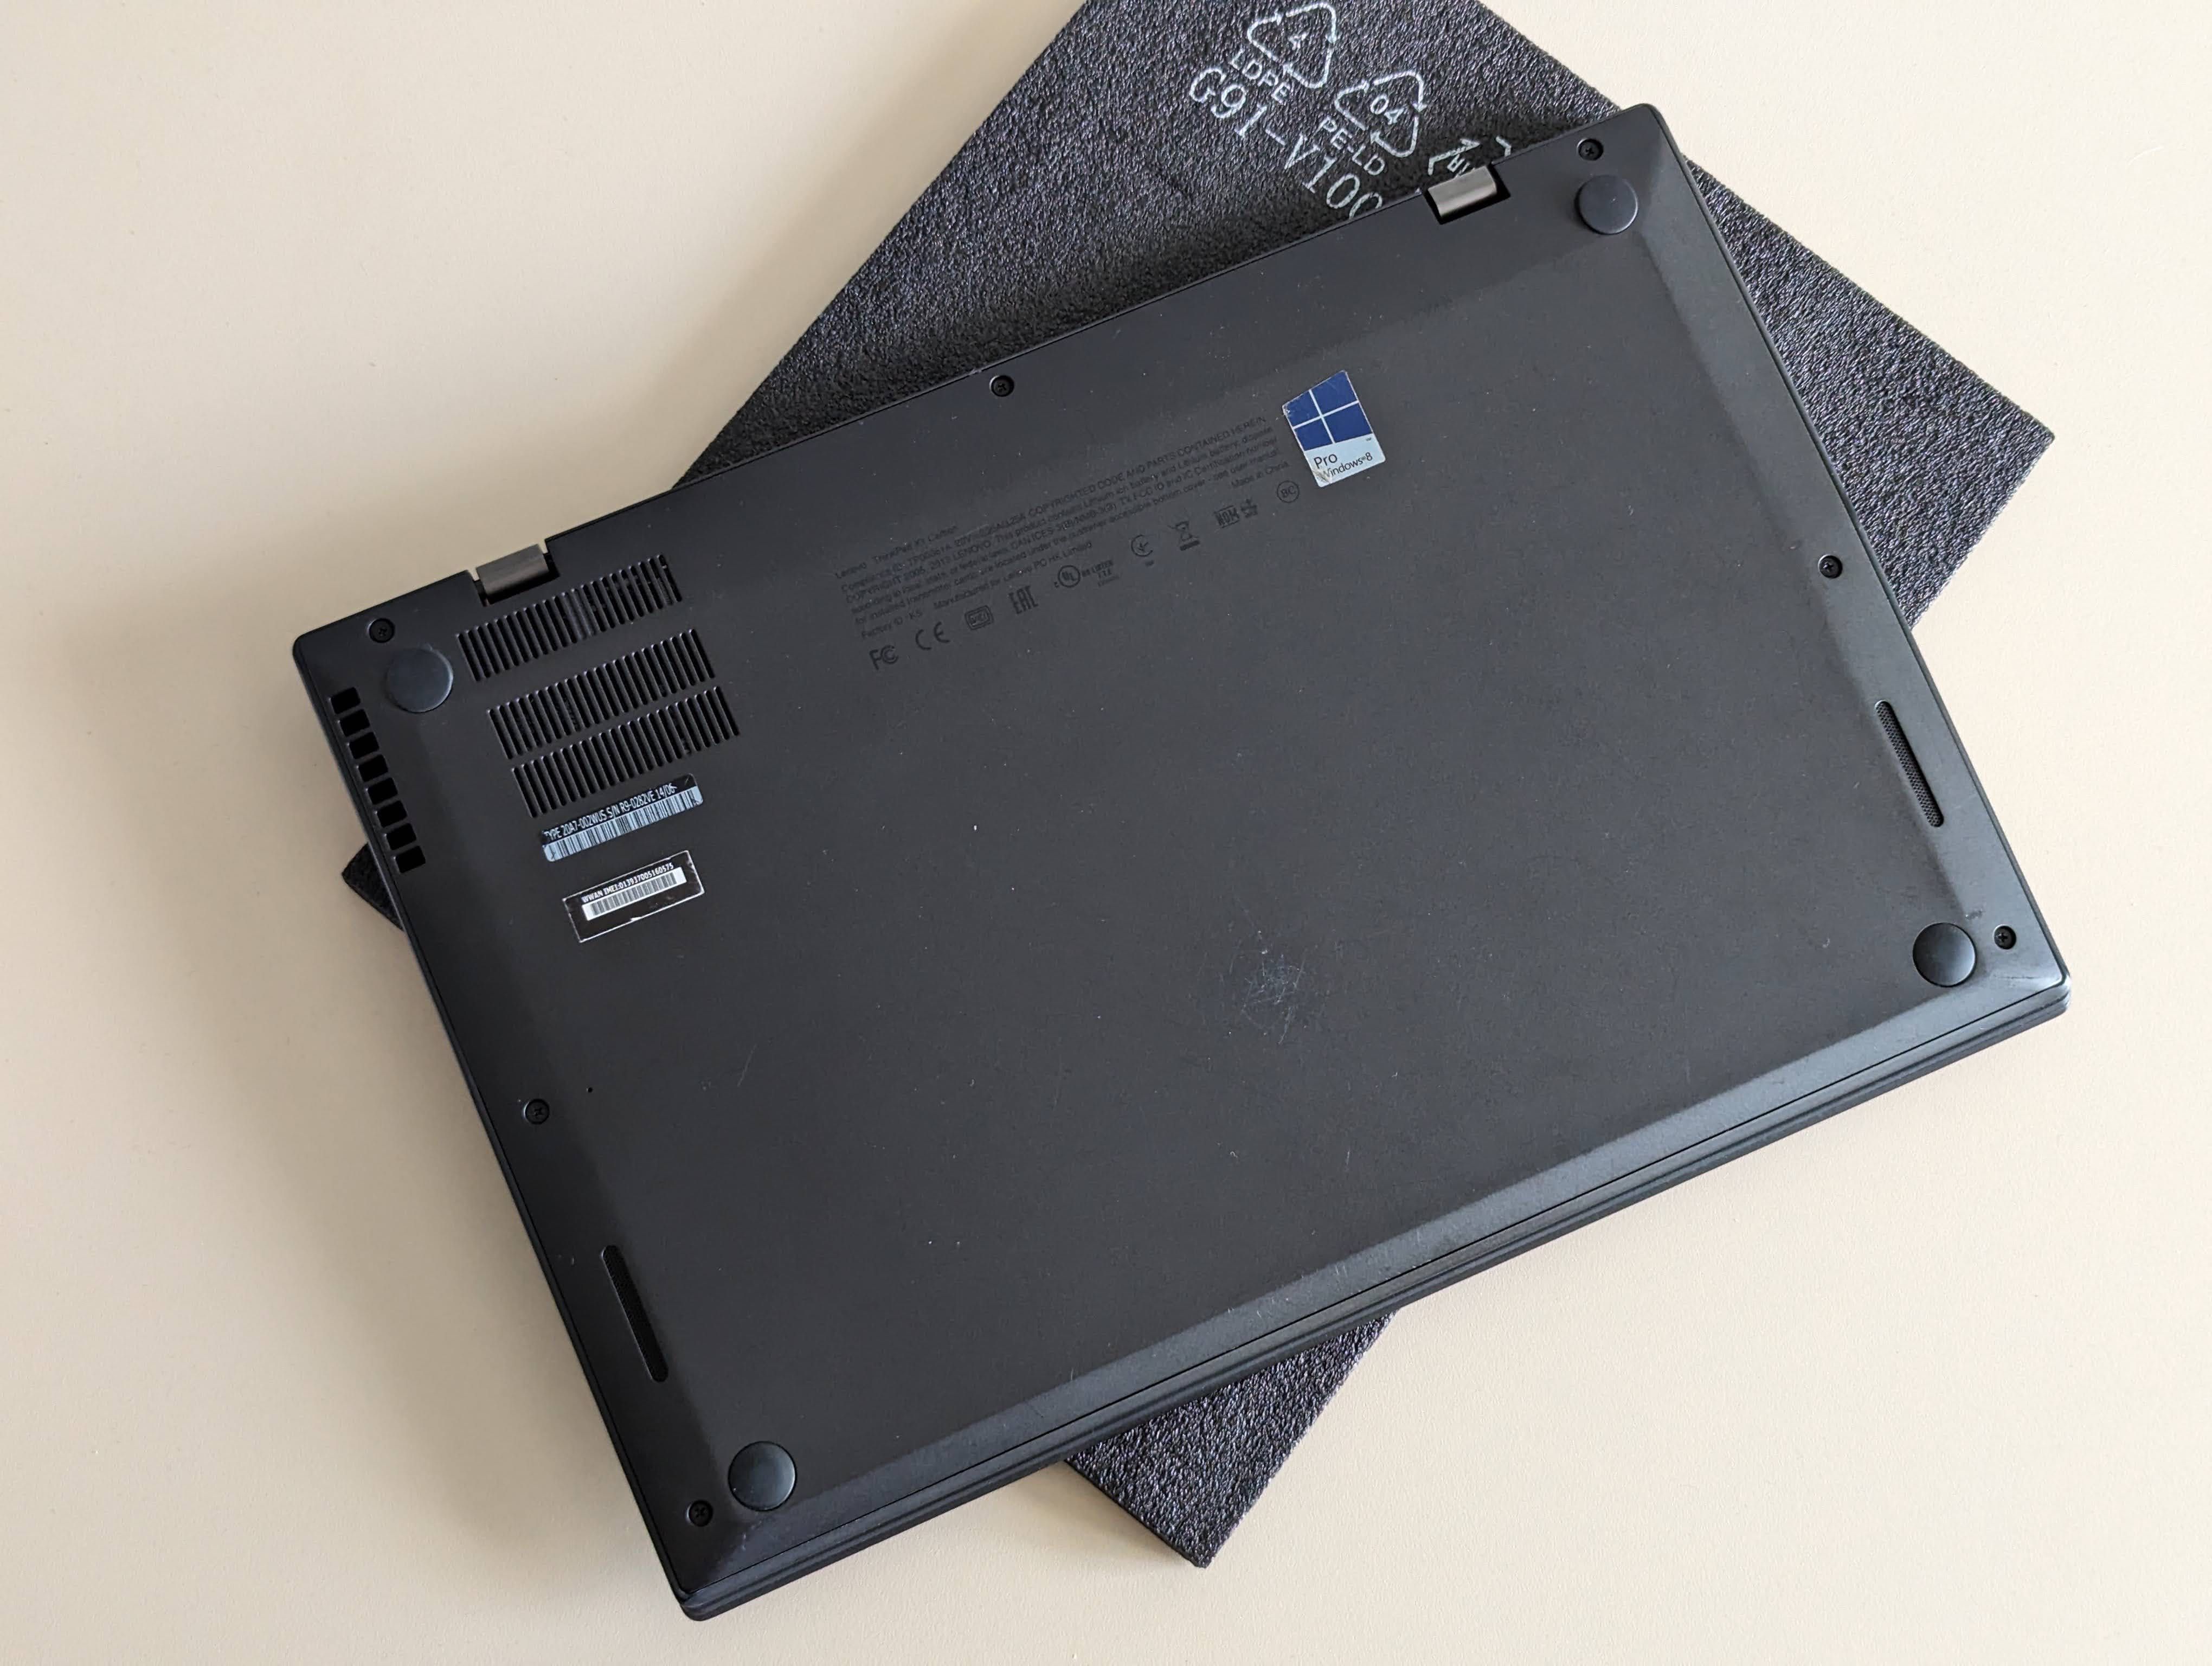 ThinkPad X1 Carbon 2th Gen  i7-4600u, 8GB, під відновлення, деталі